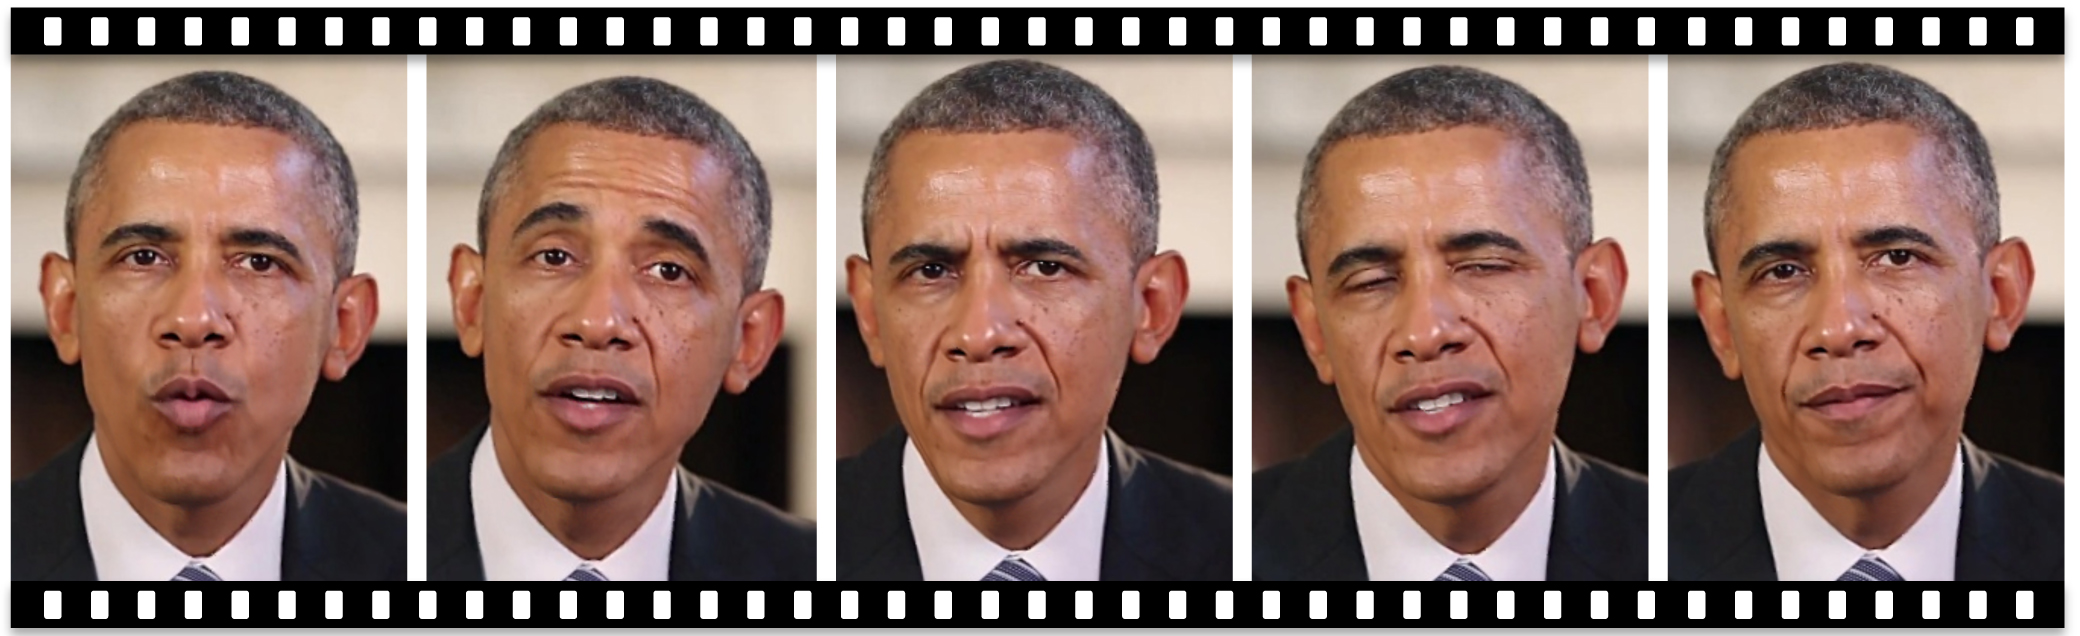 Yapay zeka sahte Obama videosu oluşturdu